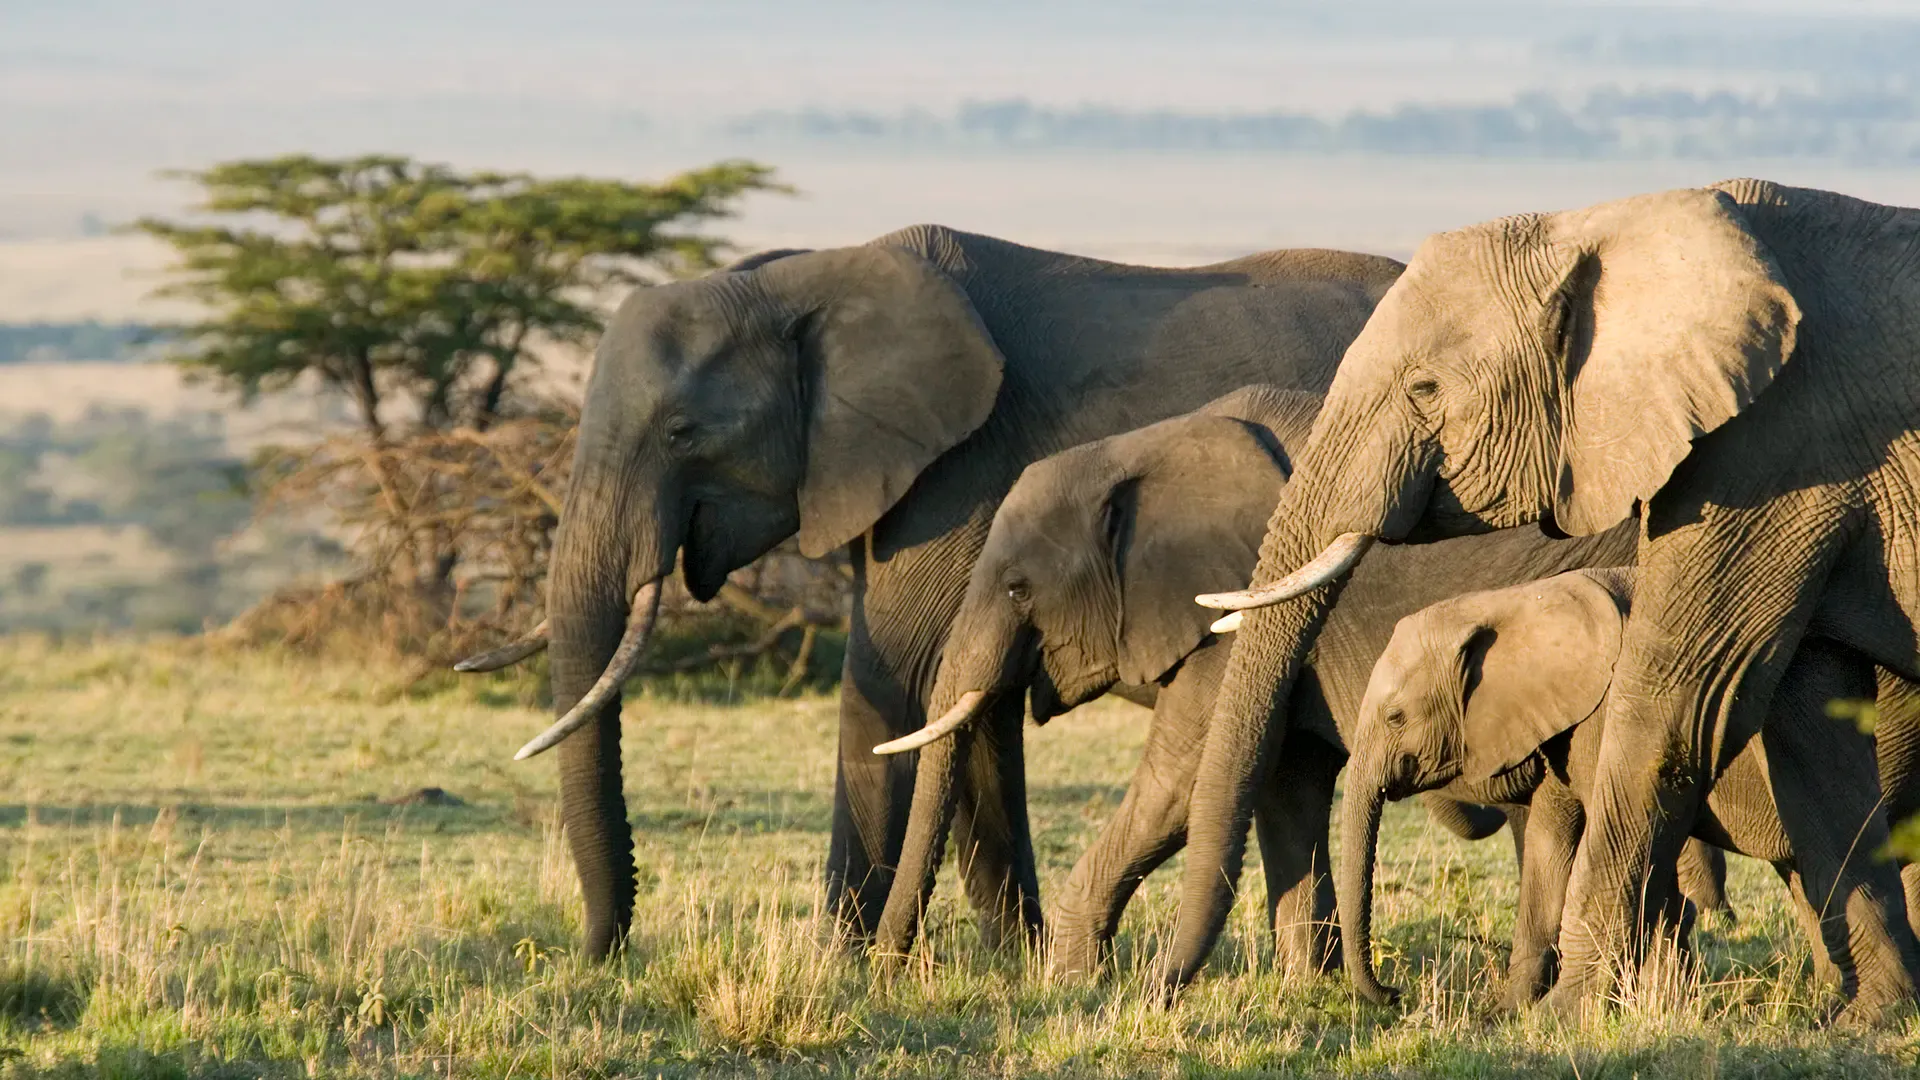 A family of elephants in the Kenyan bush